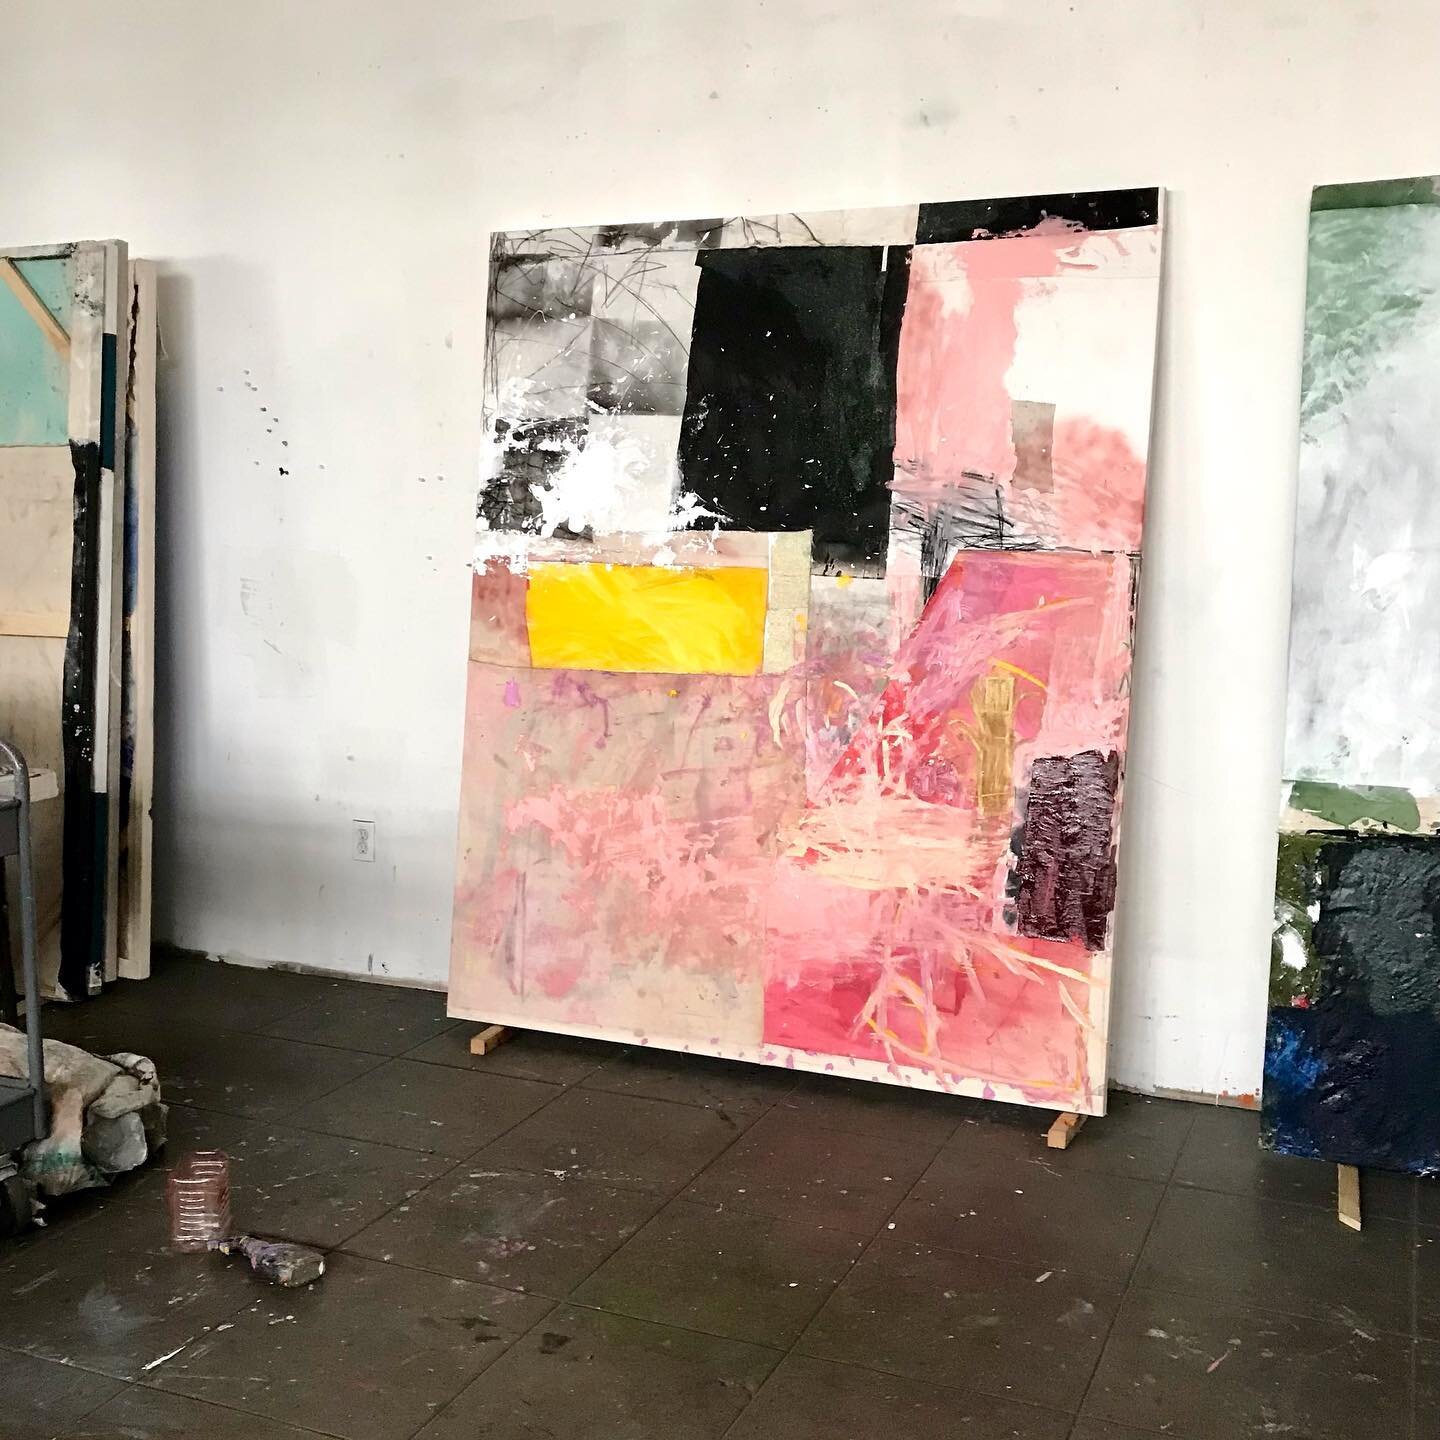 feelings and flow
&bull;
&bull;
&bull;
&bull;
#chasenwolcott #wolcott #studio #studiolife #studioshot #artwork #abstract #abstractart #california #painting #contemporary #contemporaryart